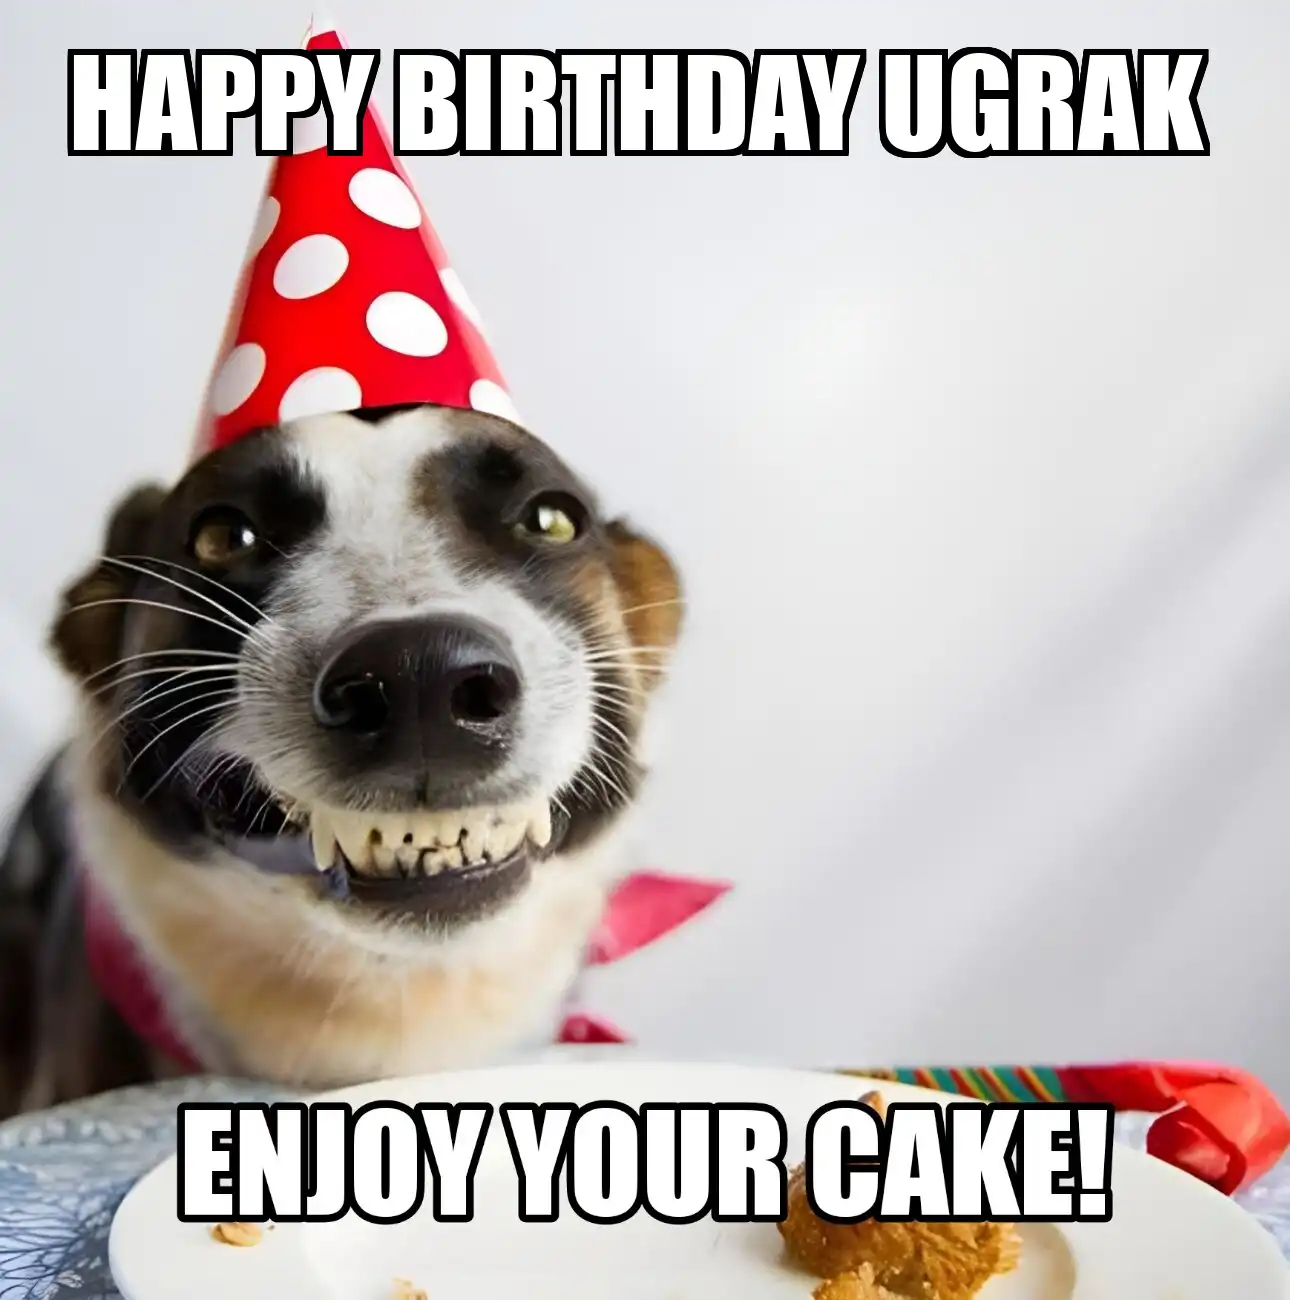 Happy Birthday Ugrak Enjoy Your Cake Dog Meme